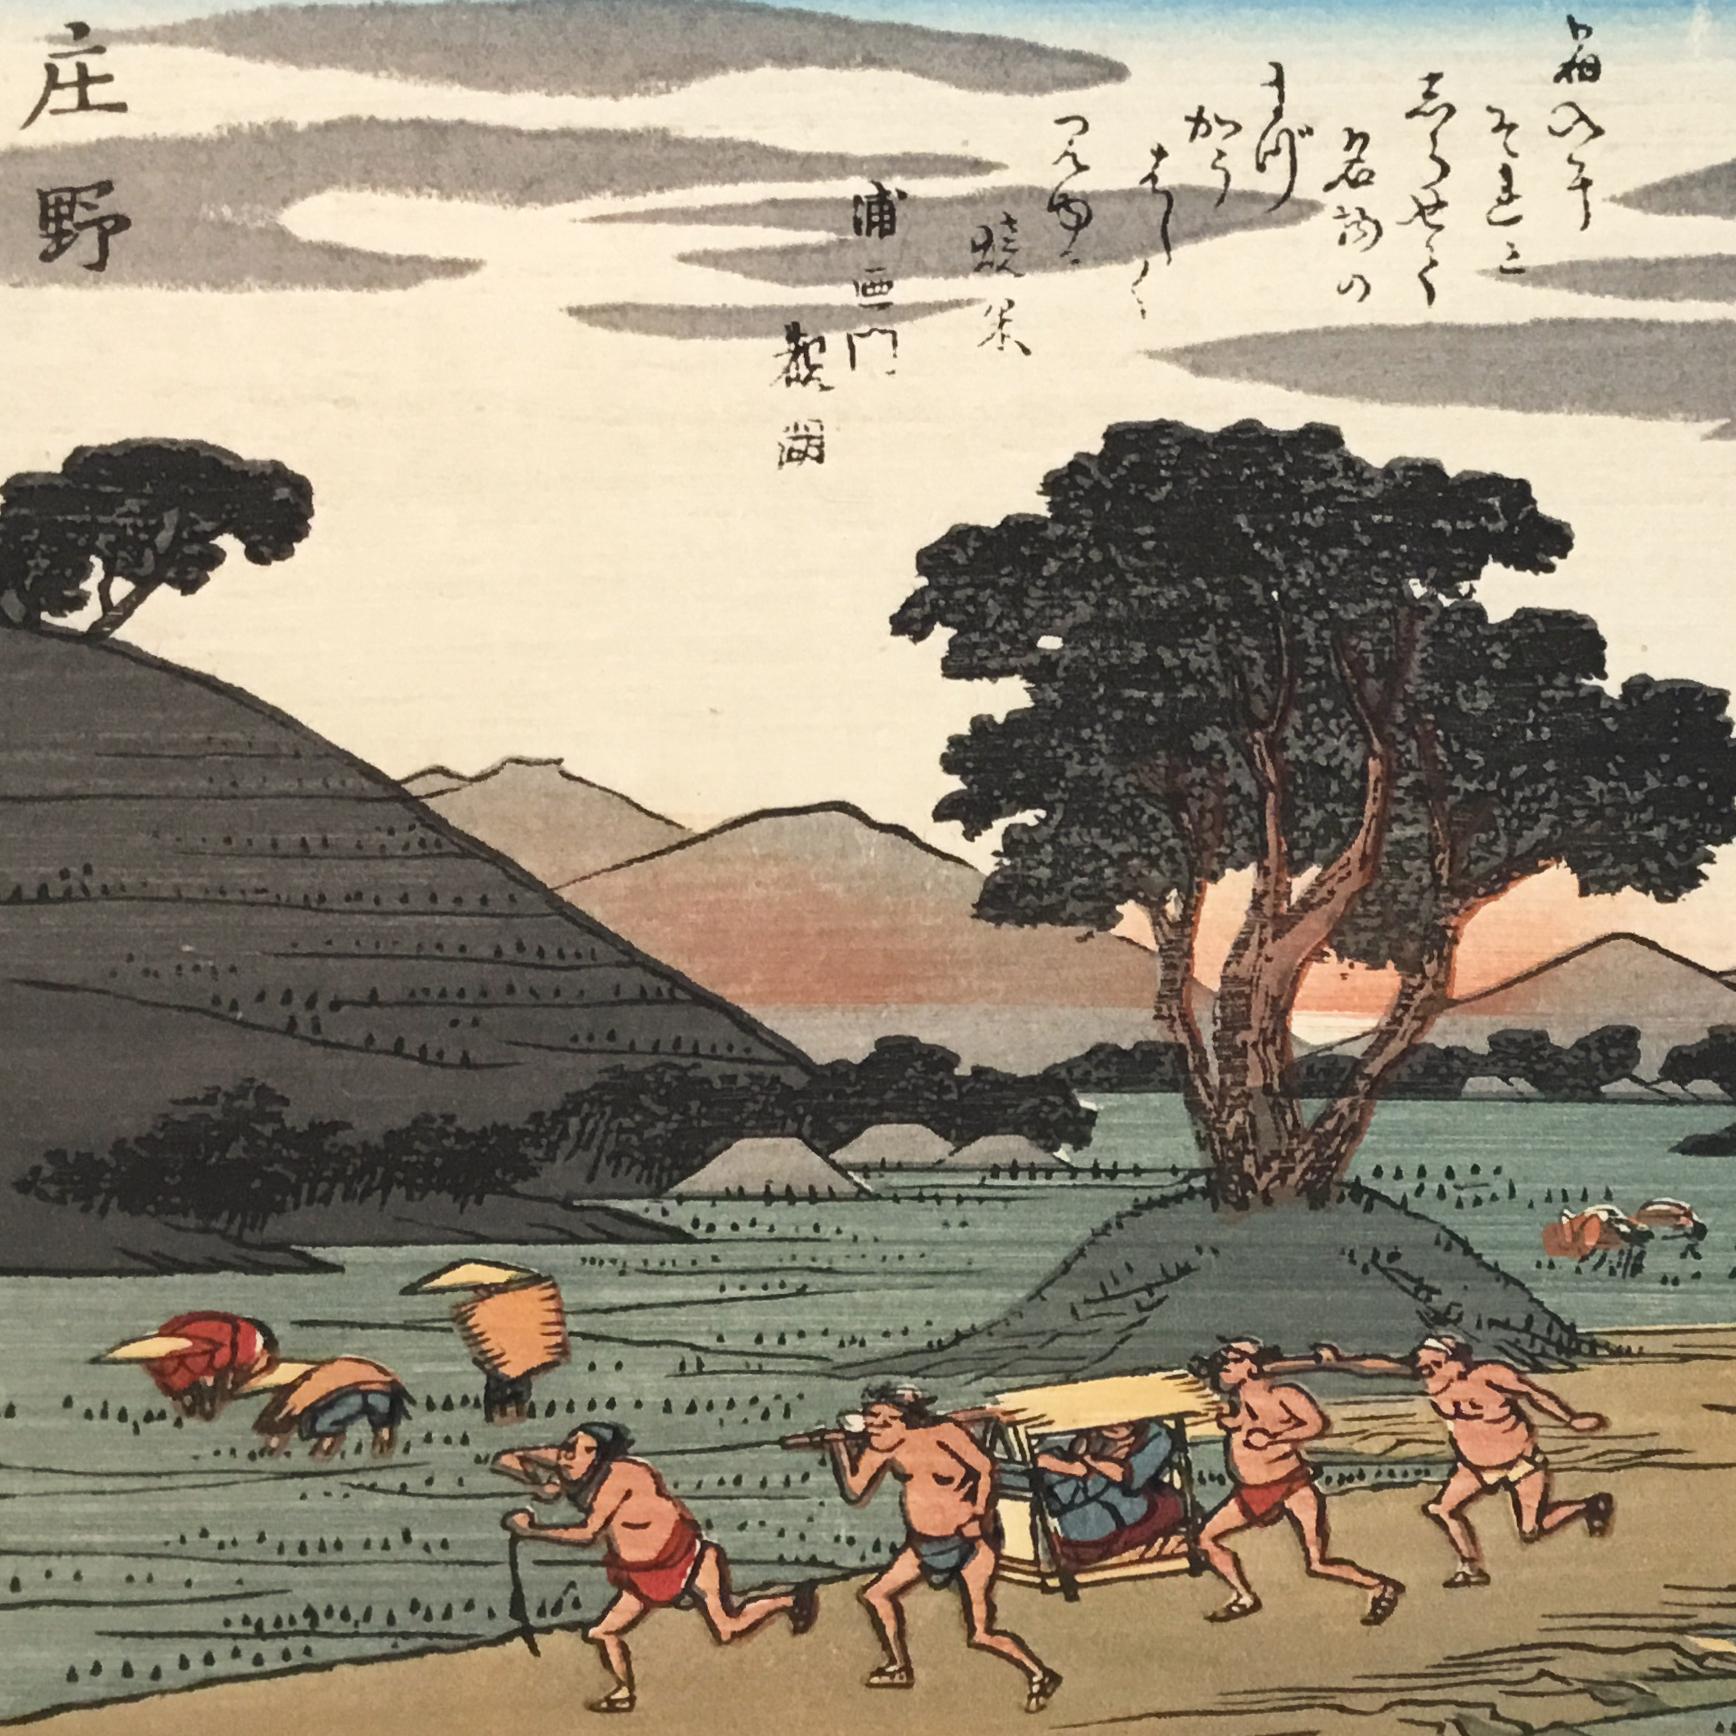 'View of Shono', After Utagawa Hiroshige, Ukiyo-E Woodblock, Tokaido, Edo - Print by Utagawa Hiroshige (Ando Hiroshige)